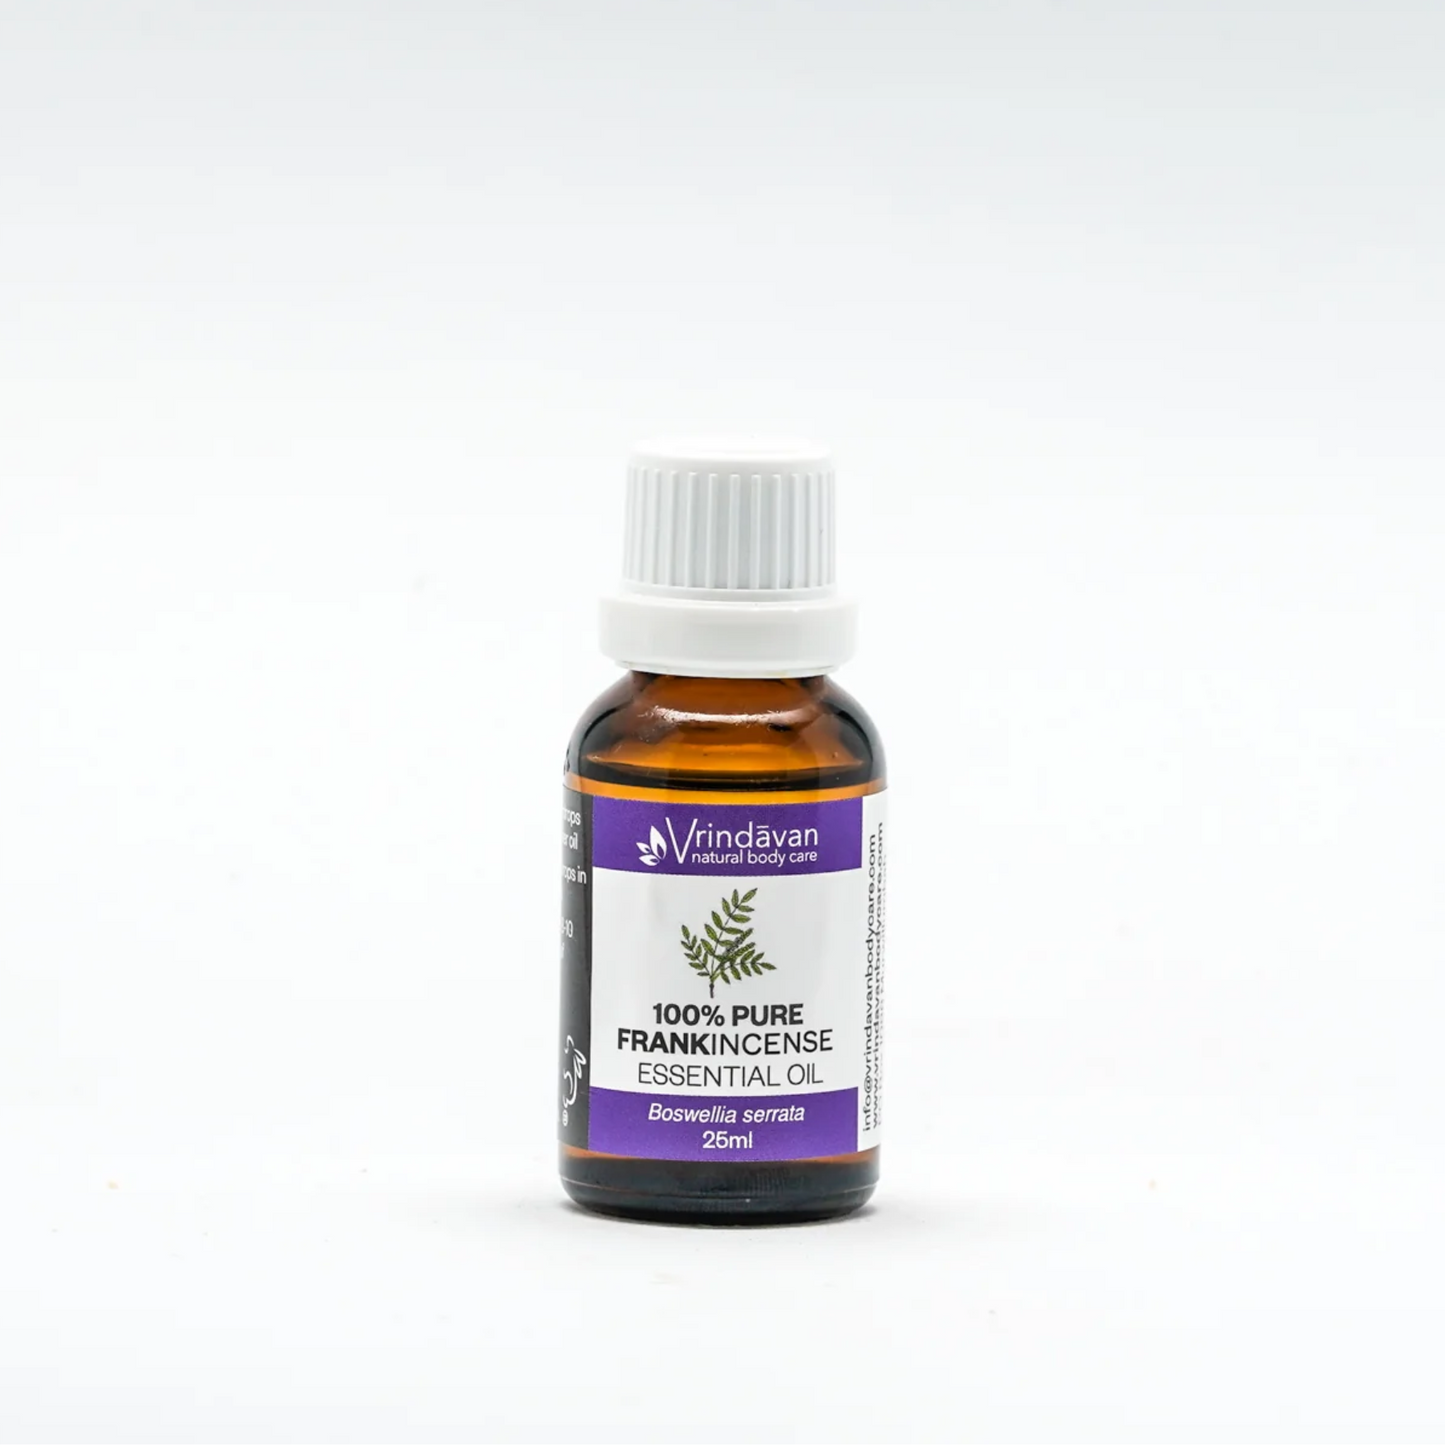 Vrindavan Essential Oil 100% Pure Frankincense, 25ml